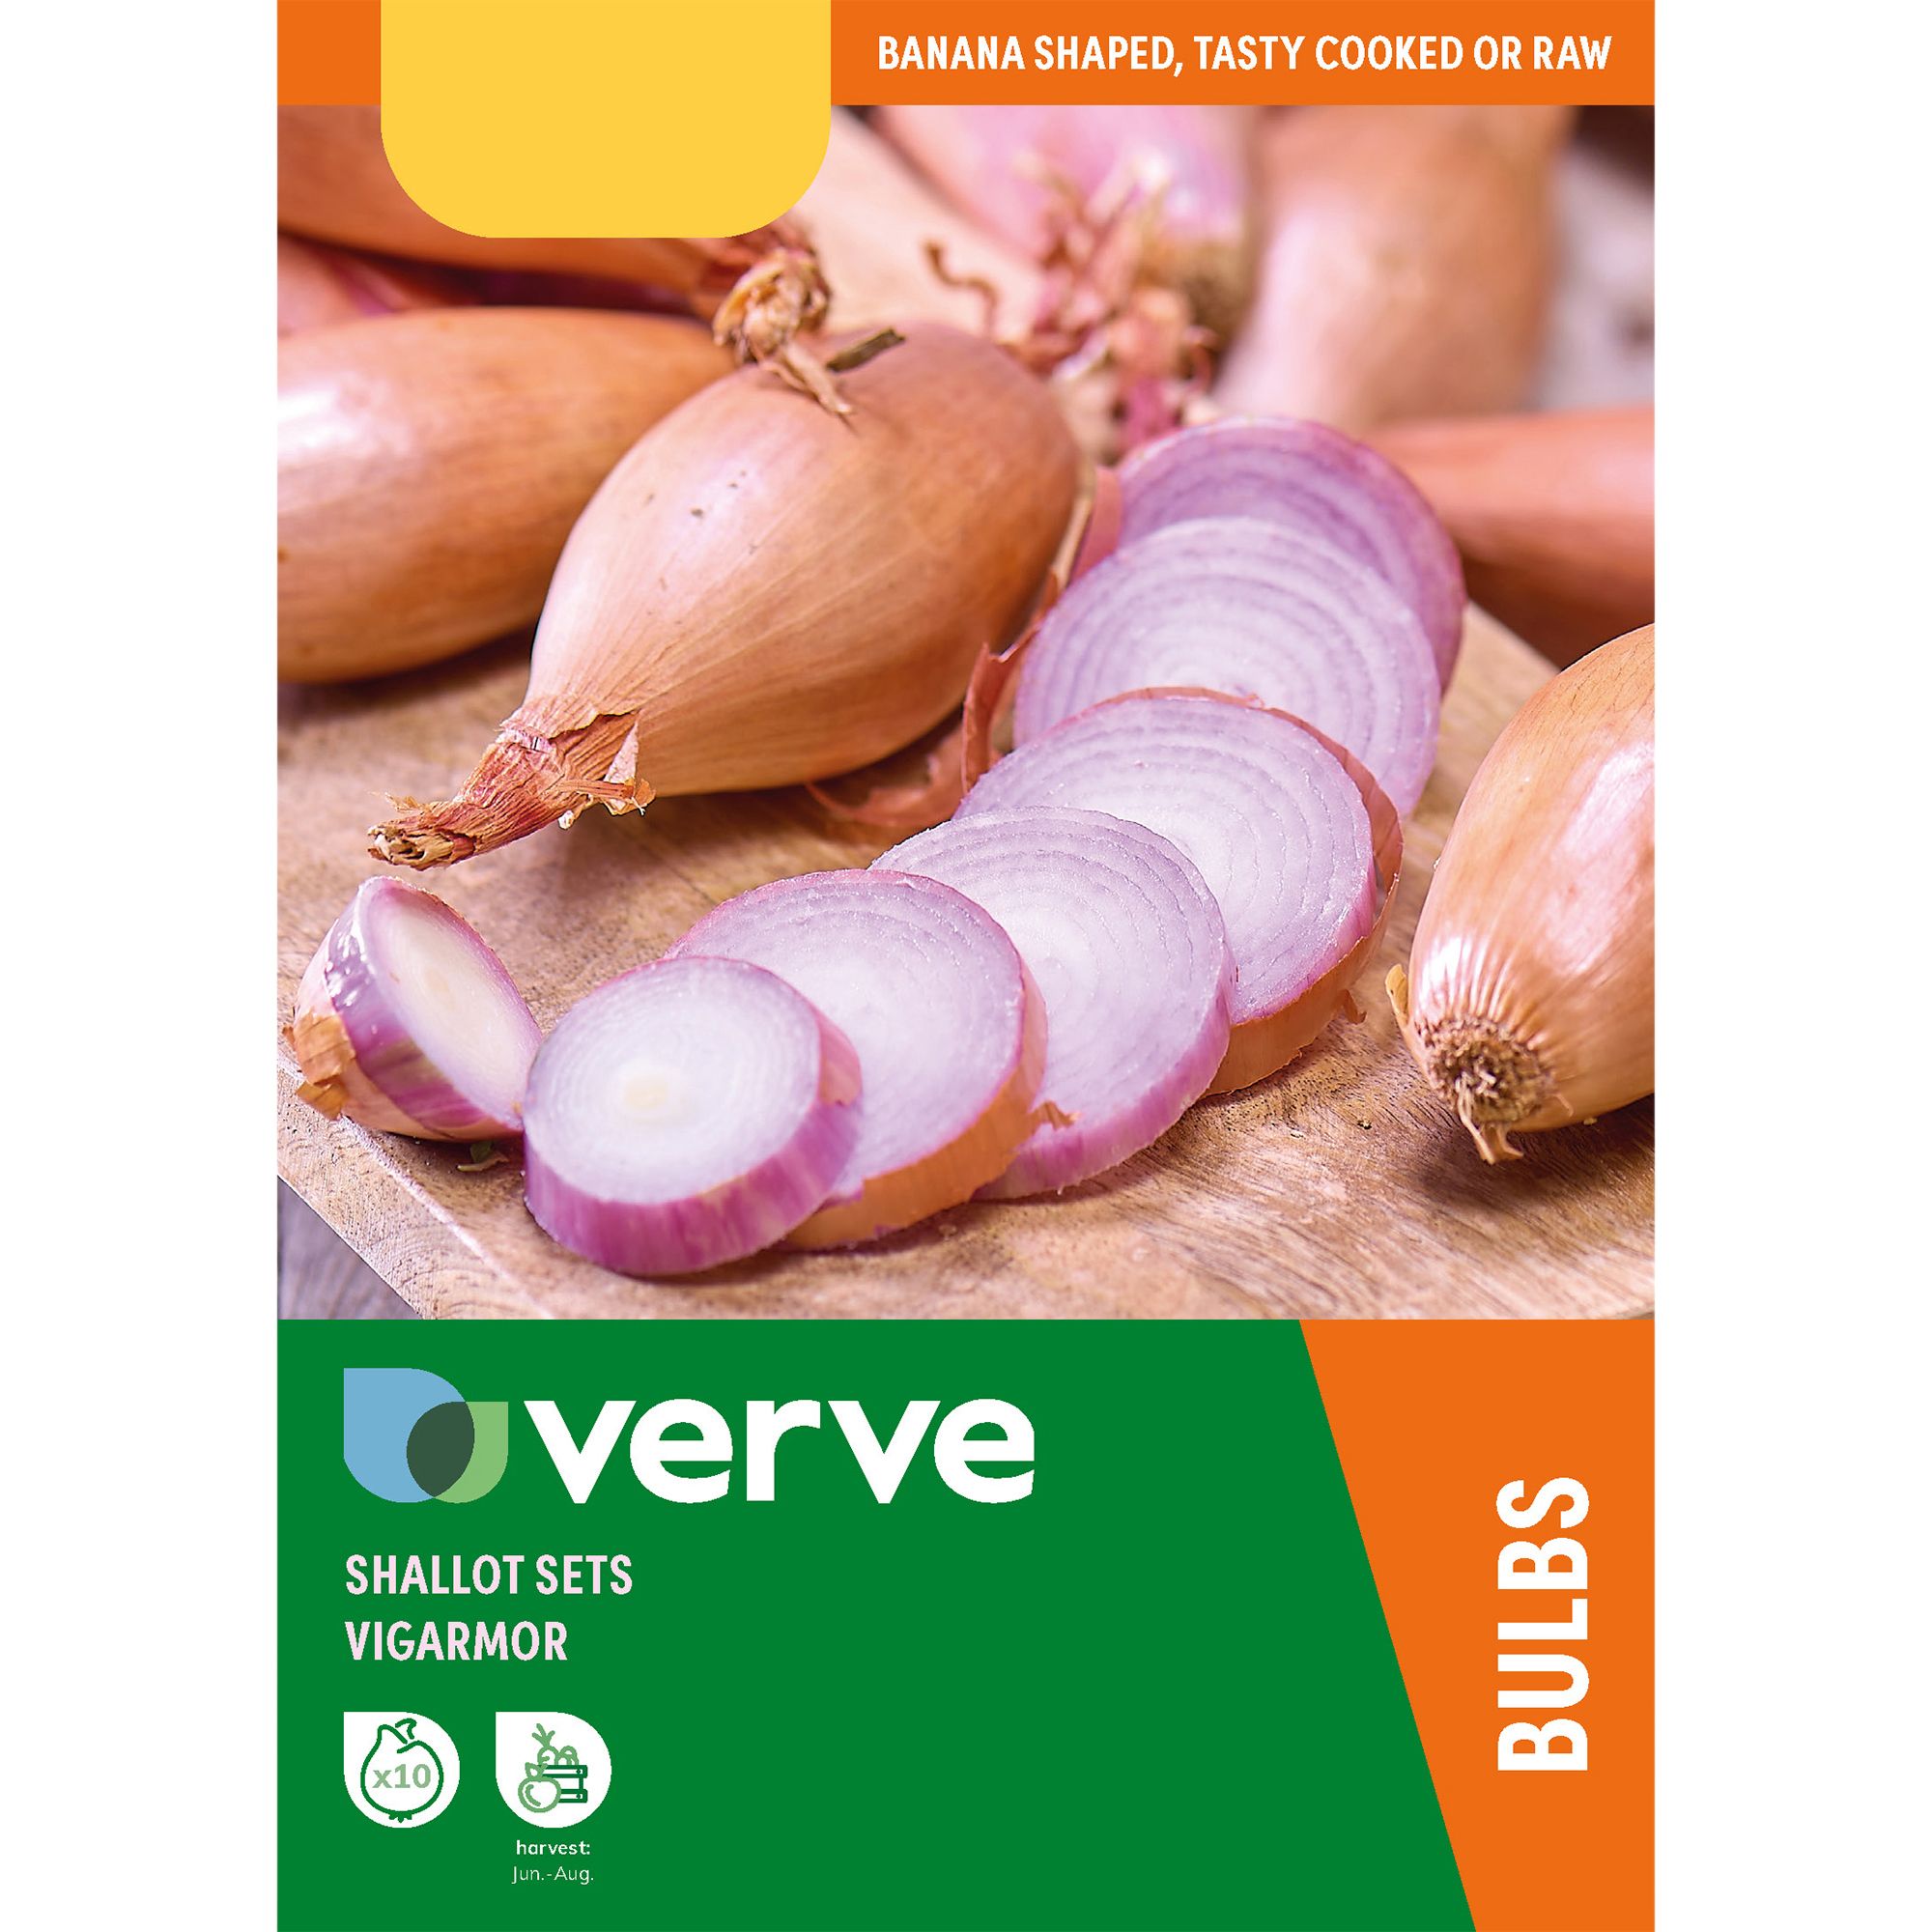 Verve Shallot Vegetable bulbs & seeds kit